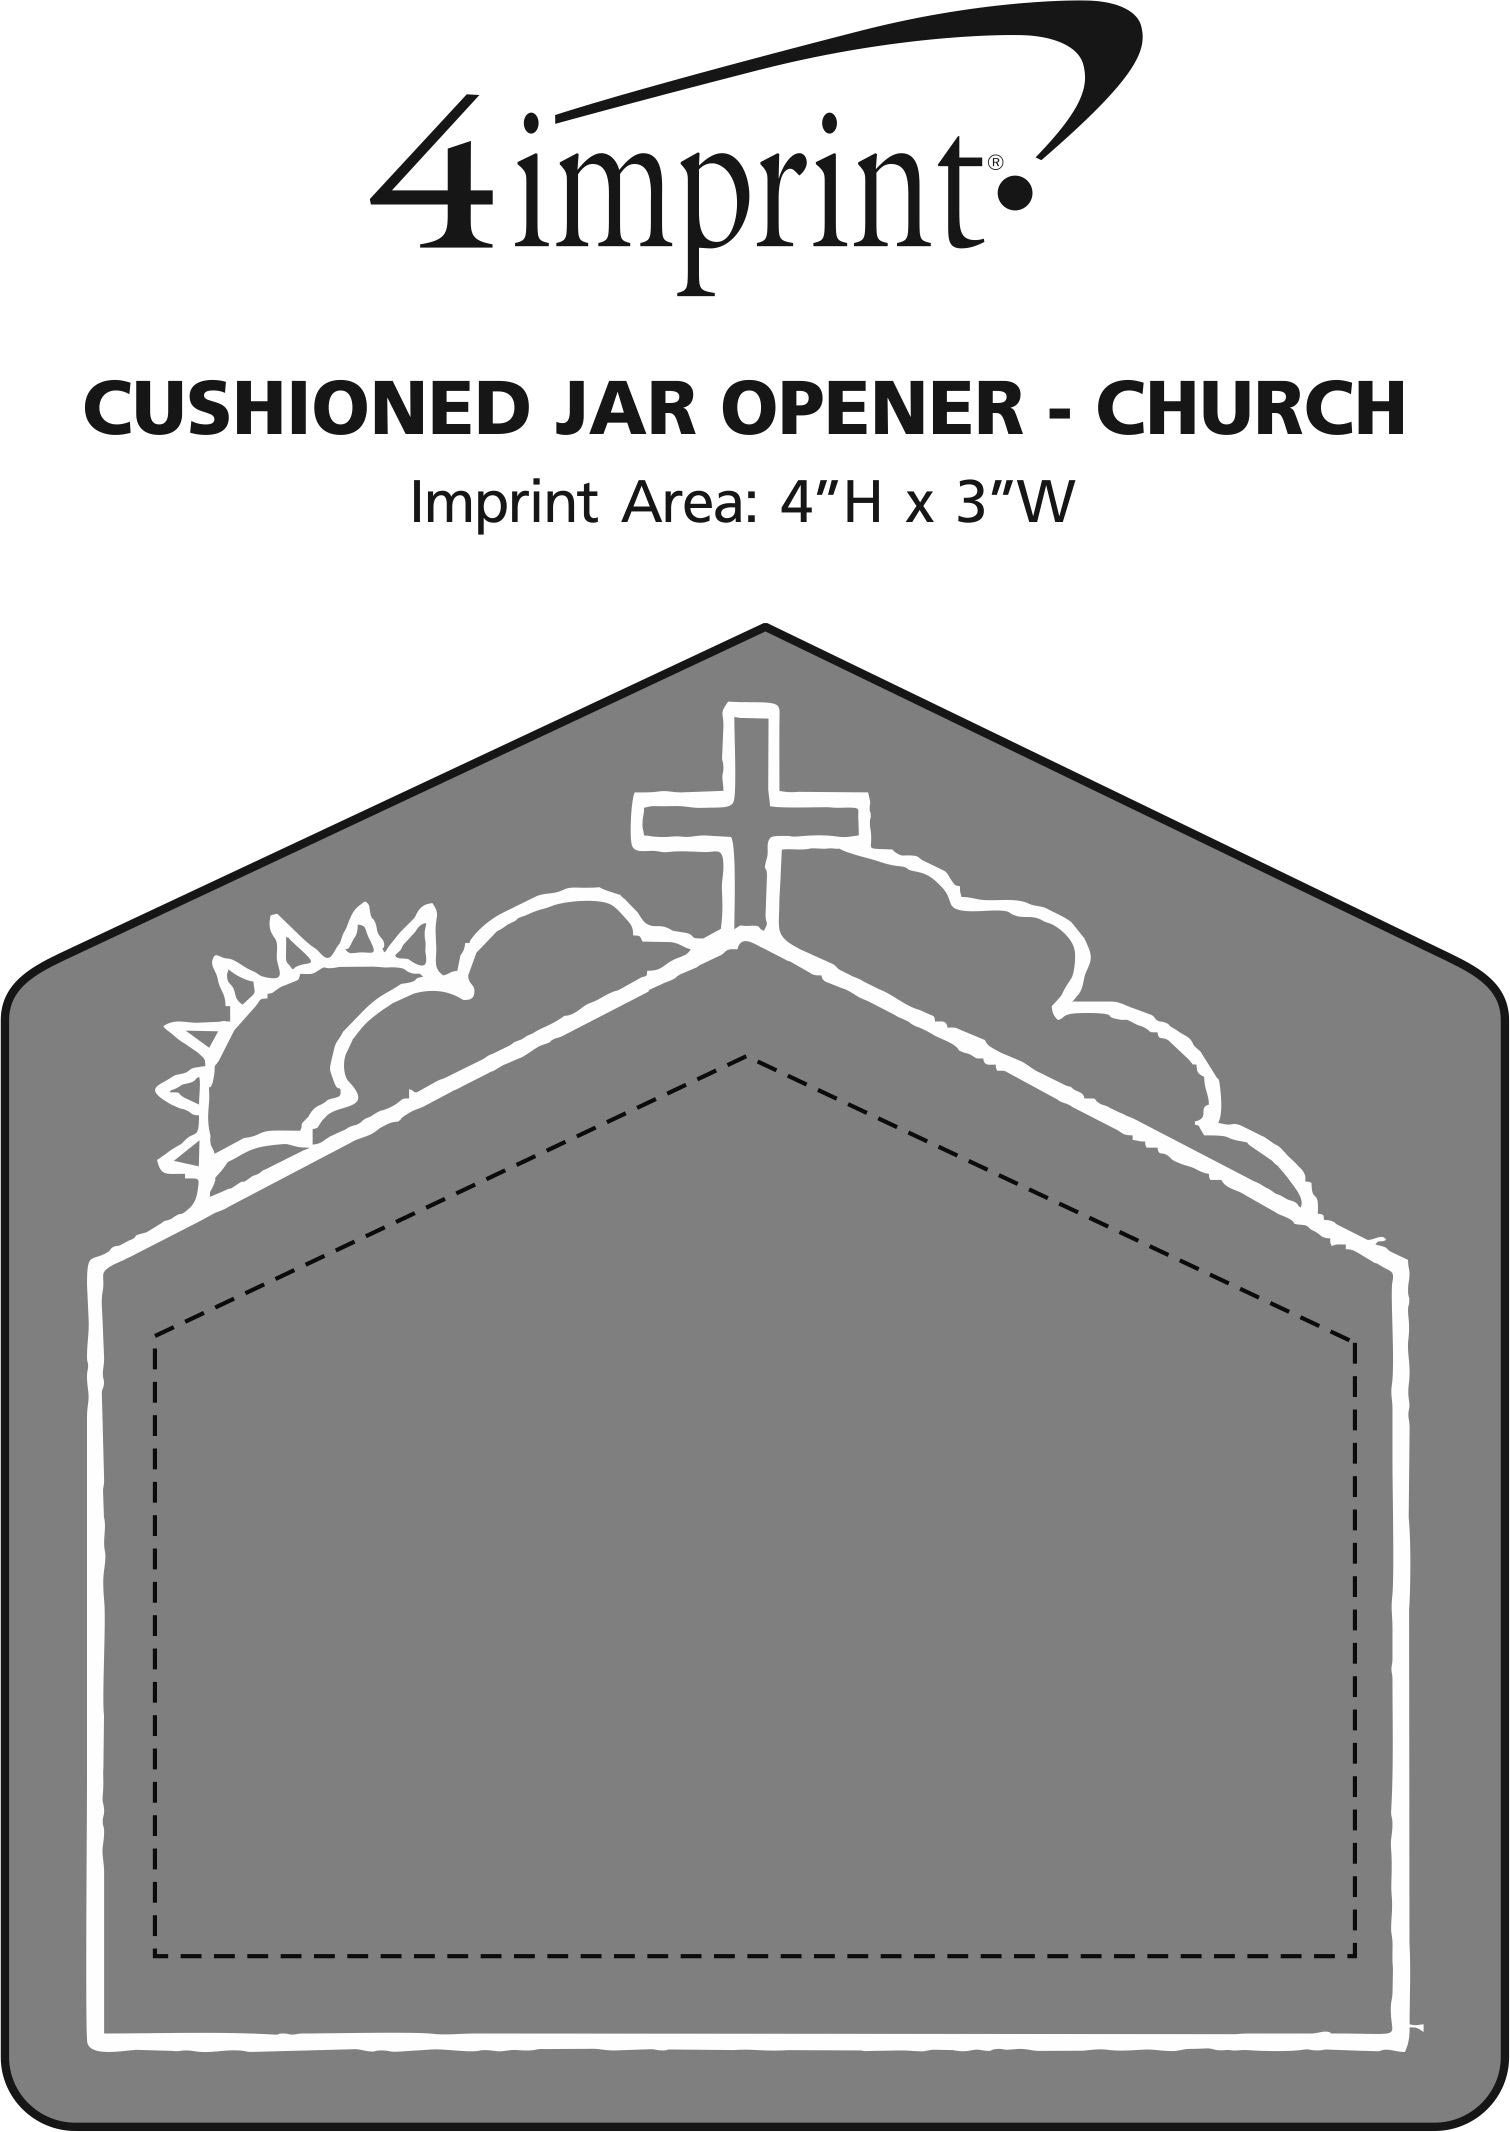 Imprint Area of Cushioned Jar Opener - Church